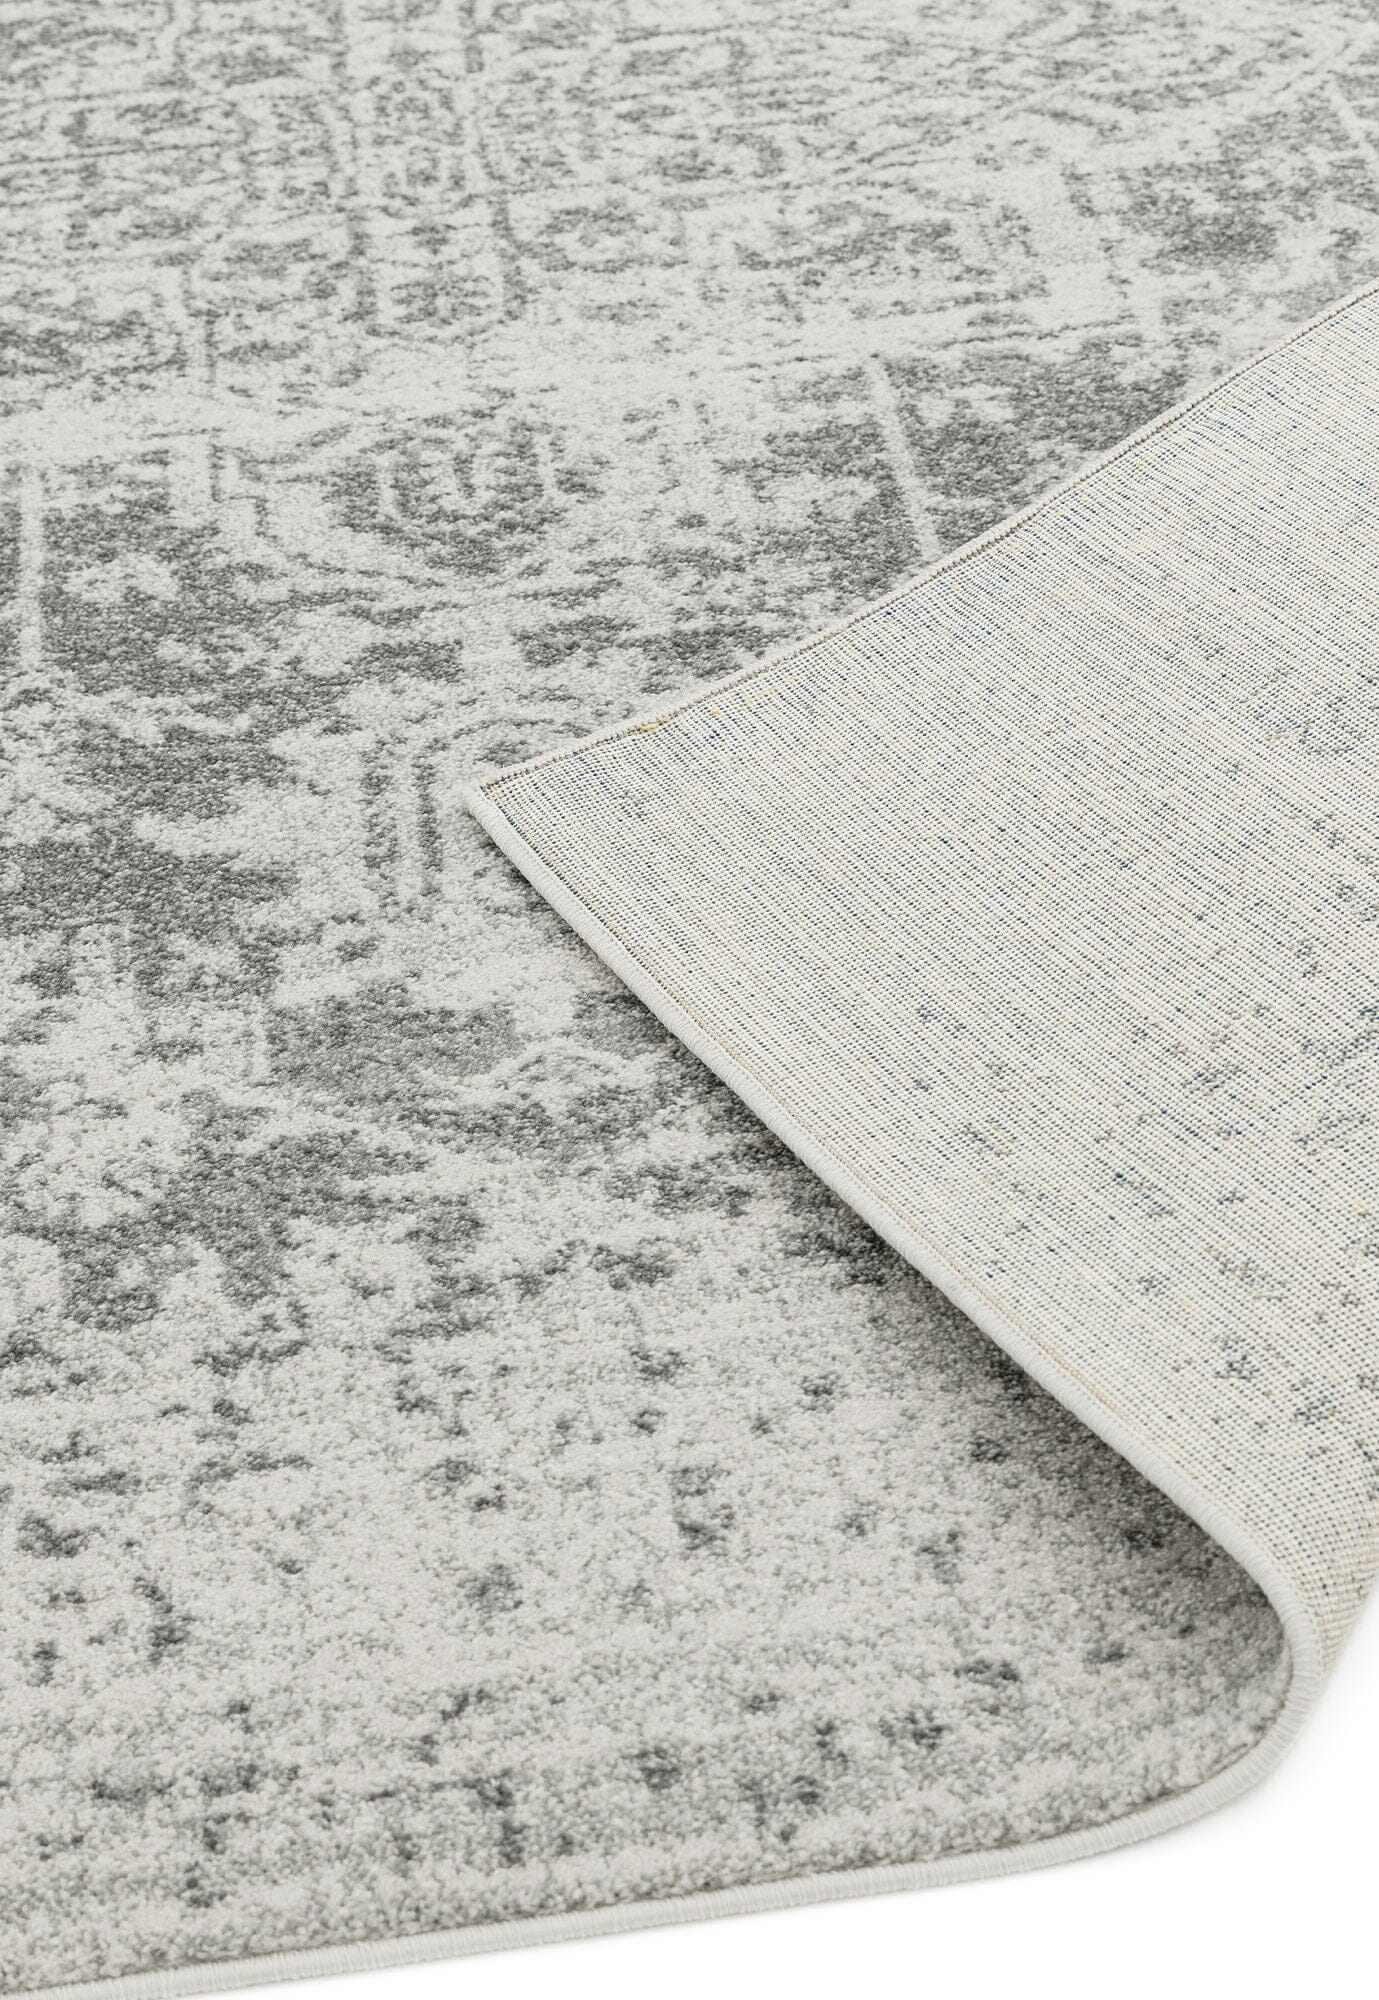 Asiatic Carpets Nova Machine Woven Rug Antique Grey - 160 x 230cm